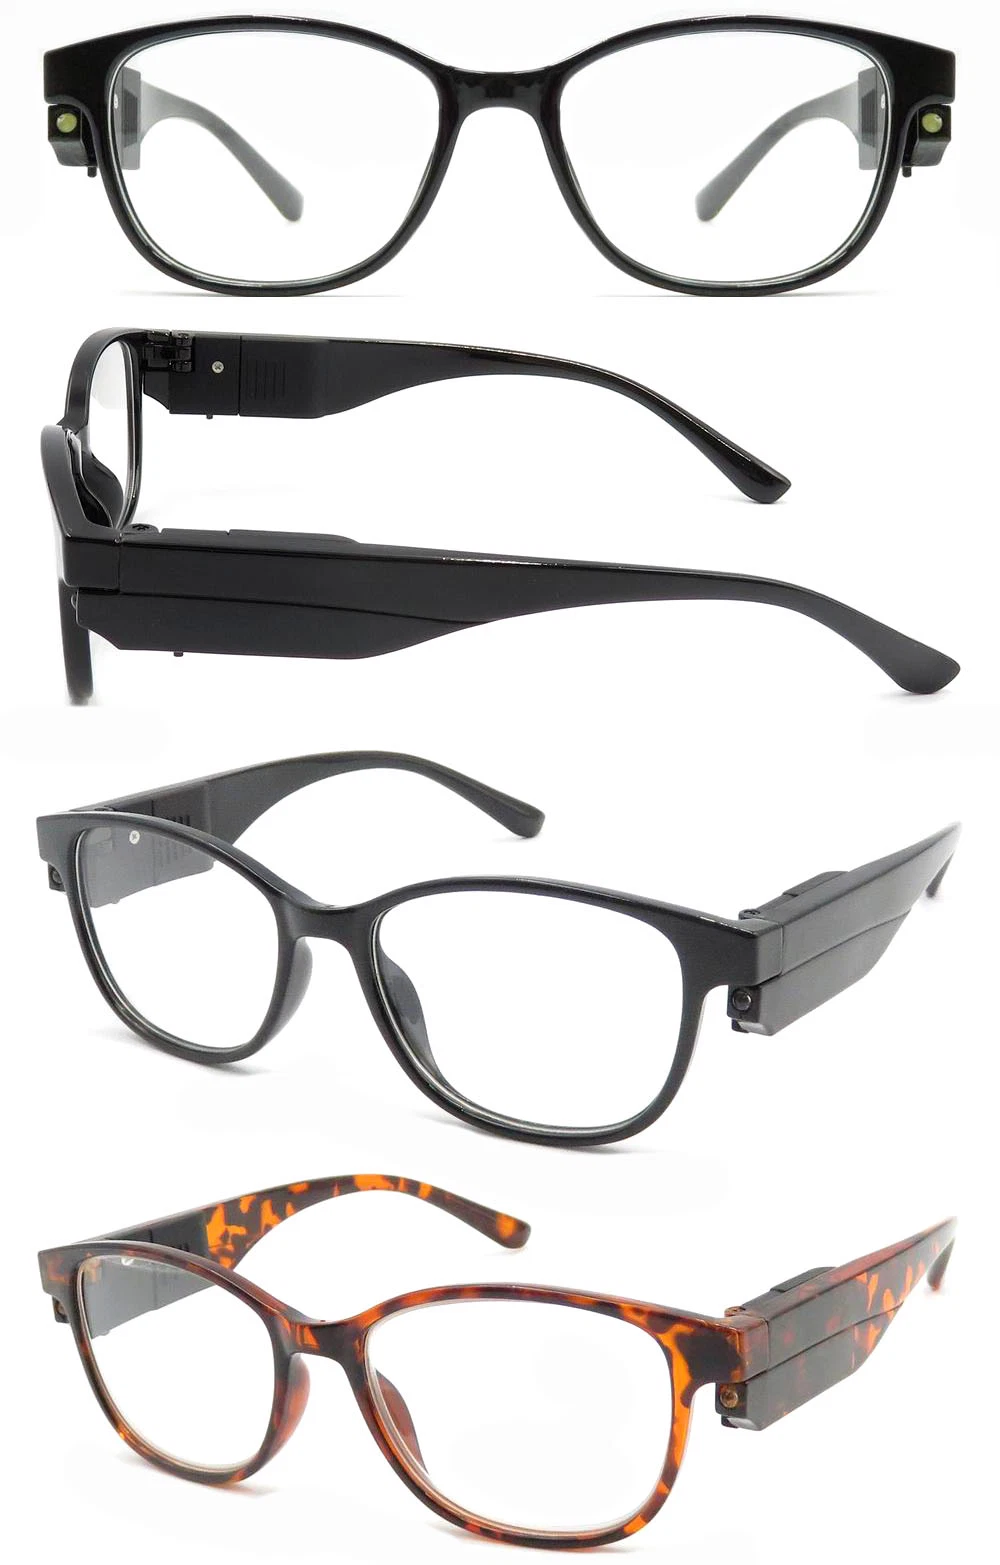 Wholesale Cheap Unisex Night Vision Reading Glasses with Light up Women Men LED Reading Glasses